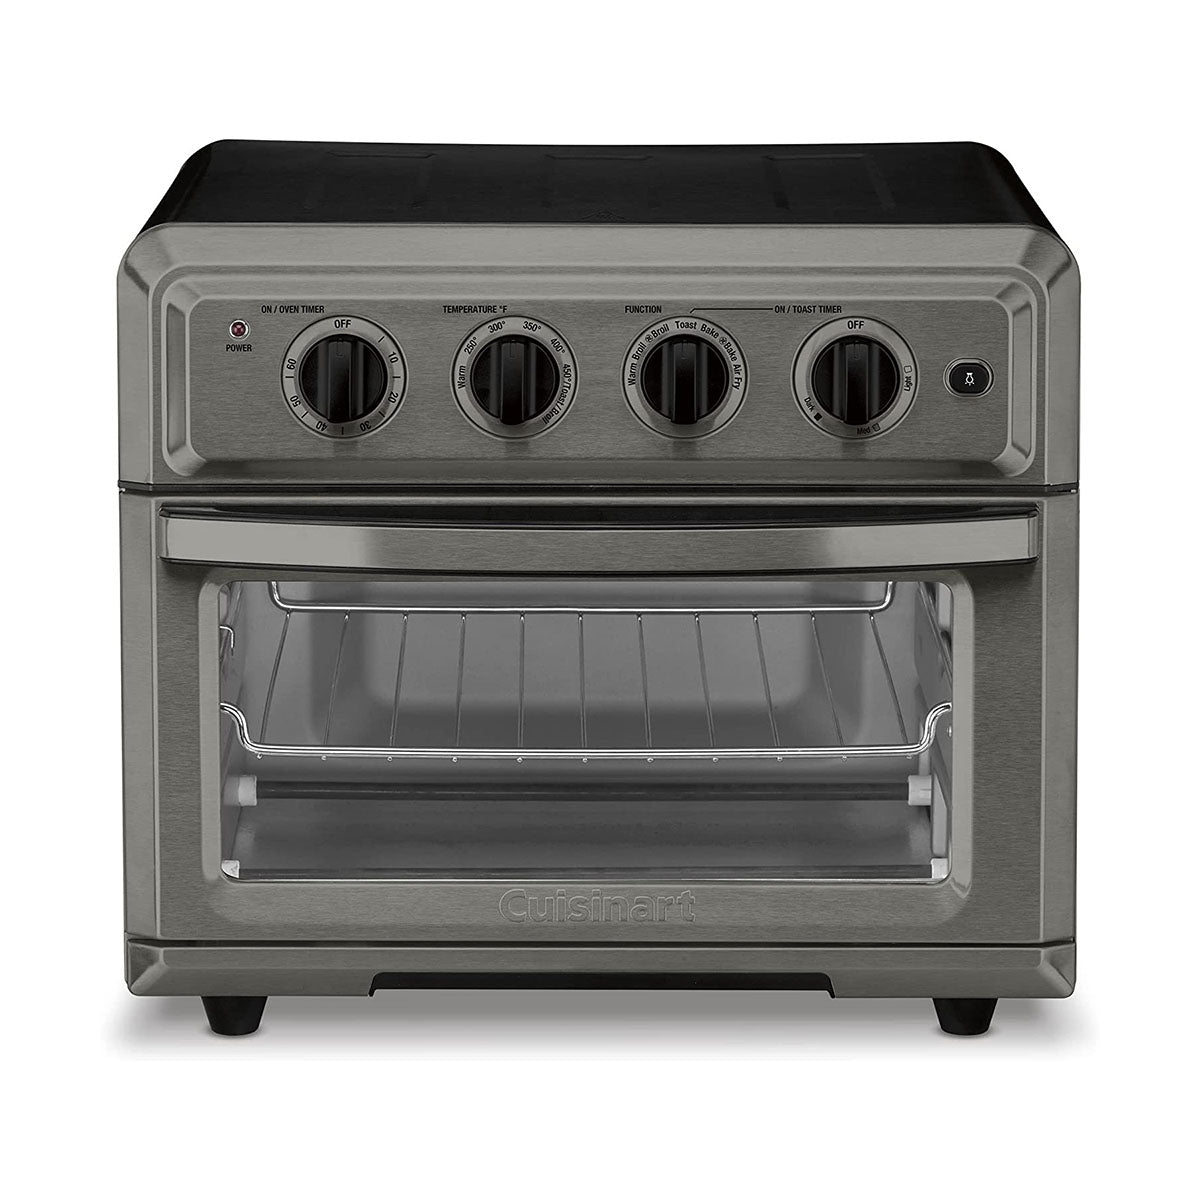 Cuisinart Air Fryer Toaster Oven -Black Stainless Steel